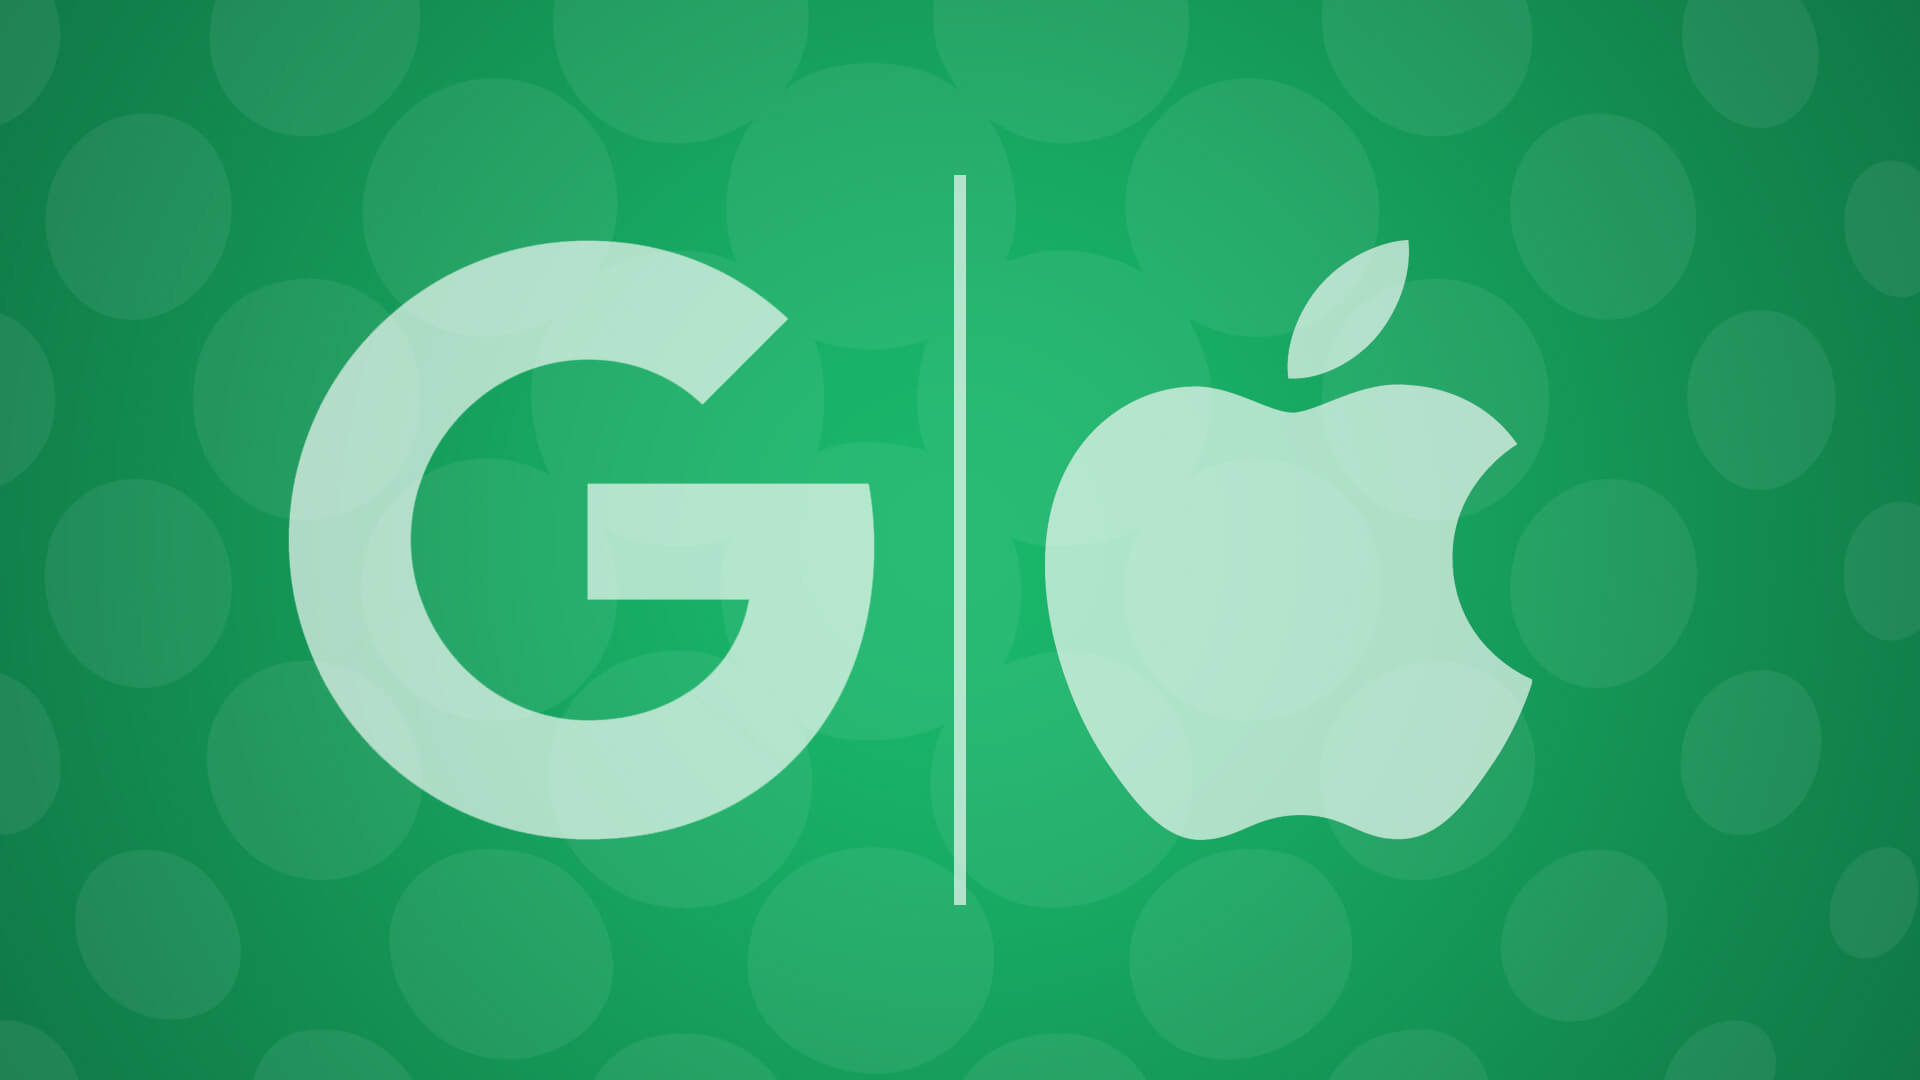 google-apple-green3-1920.jpg